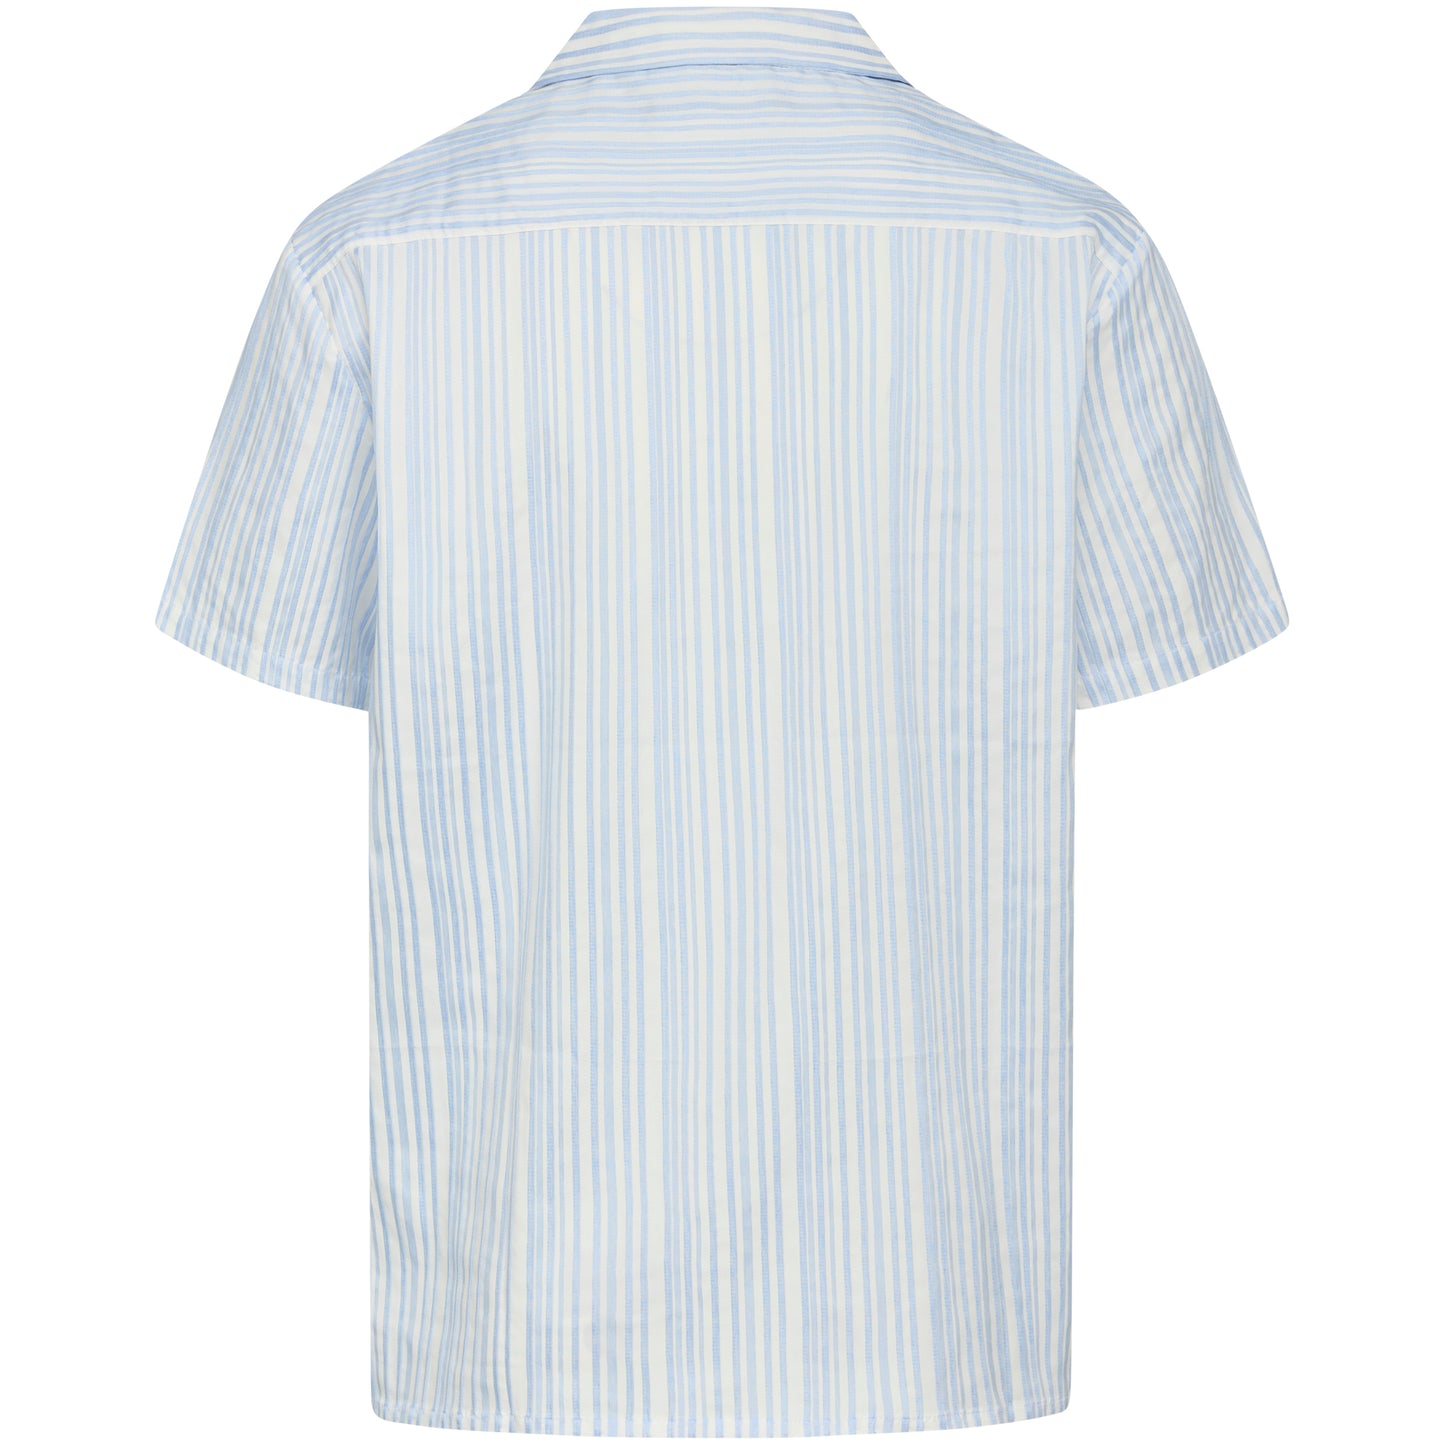 Bruuns Bazaar Herrer - DimensionBBHomme skjorte - Lyseblå stribe